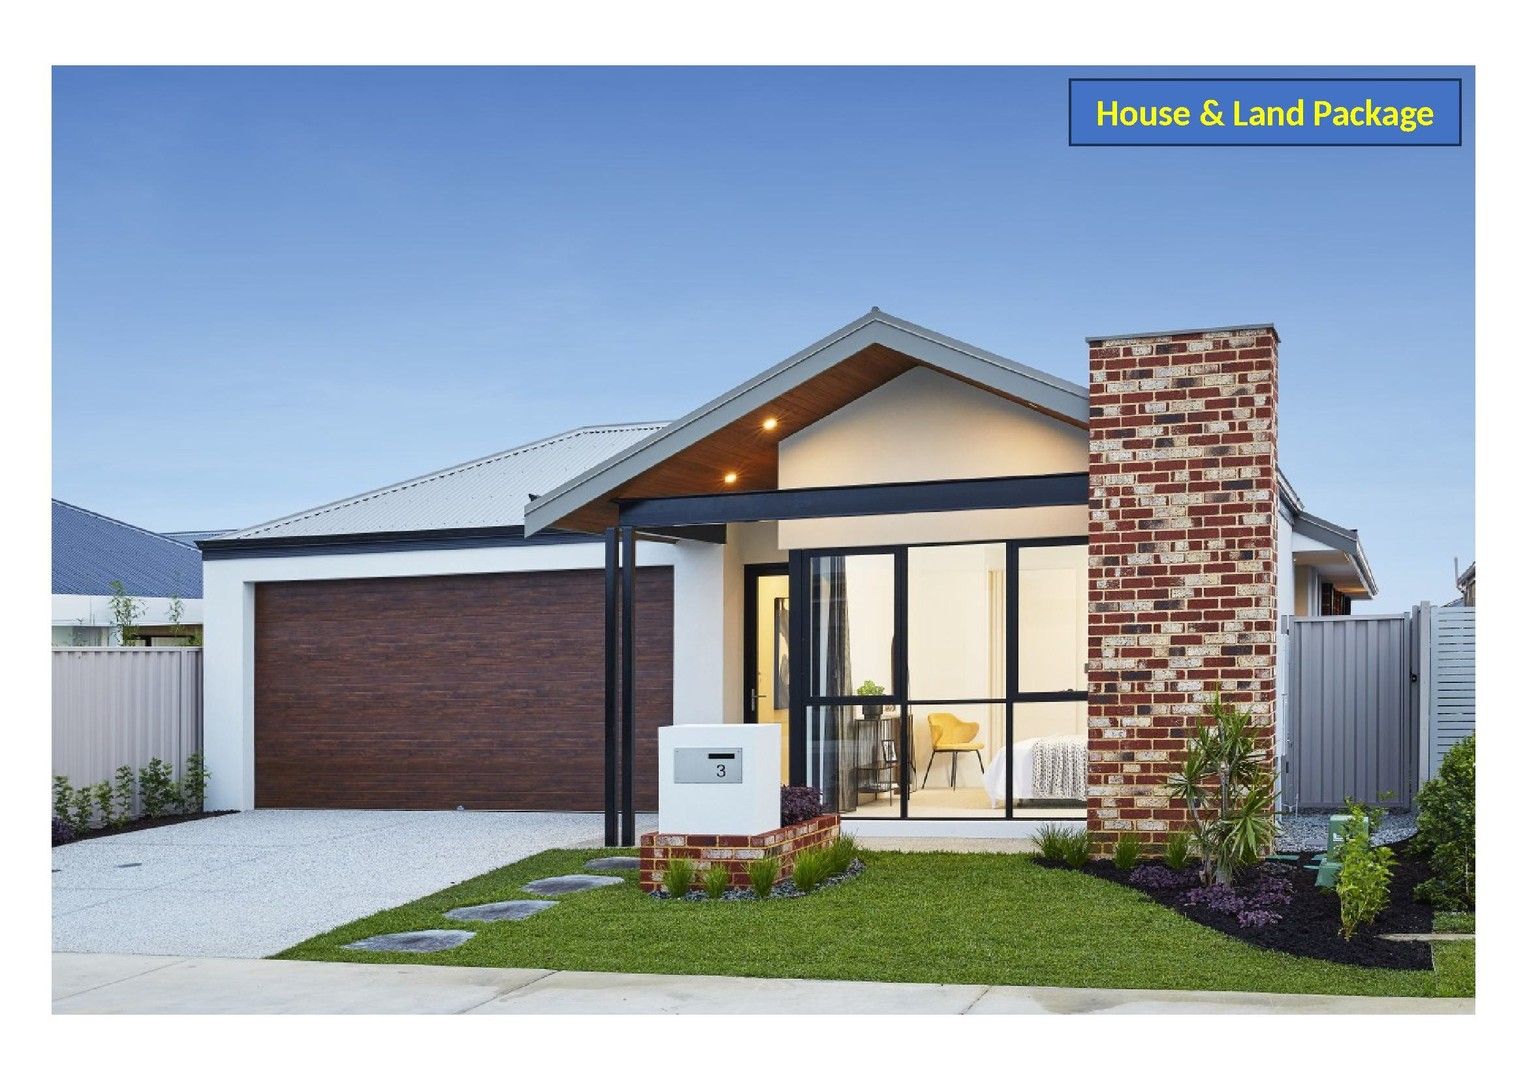 4 bedrooms New House & Land in Lot 42 Borlaug Circuit BALDIVIS WA, 6171